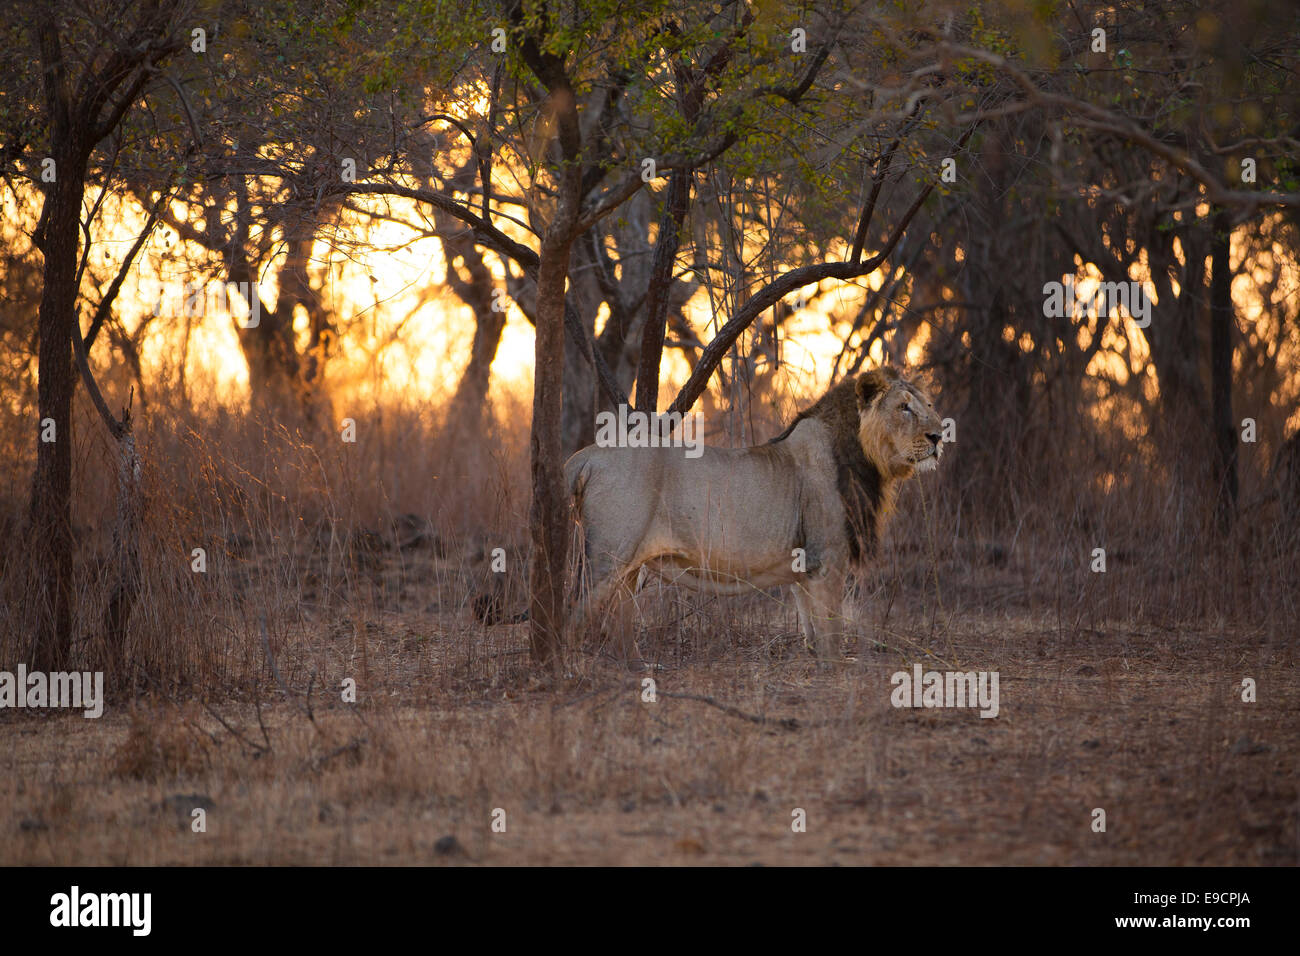 Asiatic Lion (Panthera leo persica) at Gir forest, Gujarat, India. Stock Photo